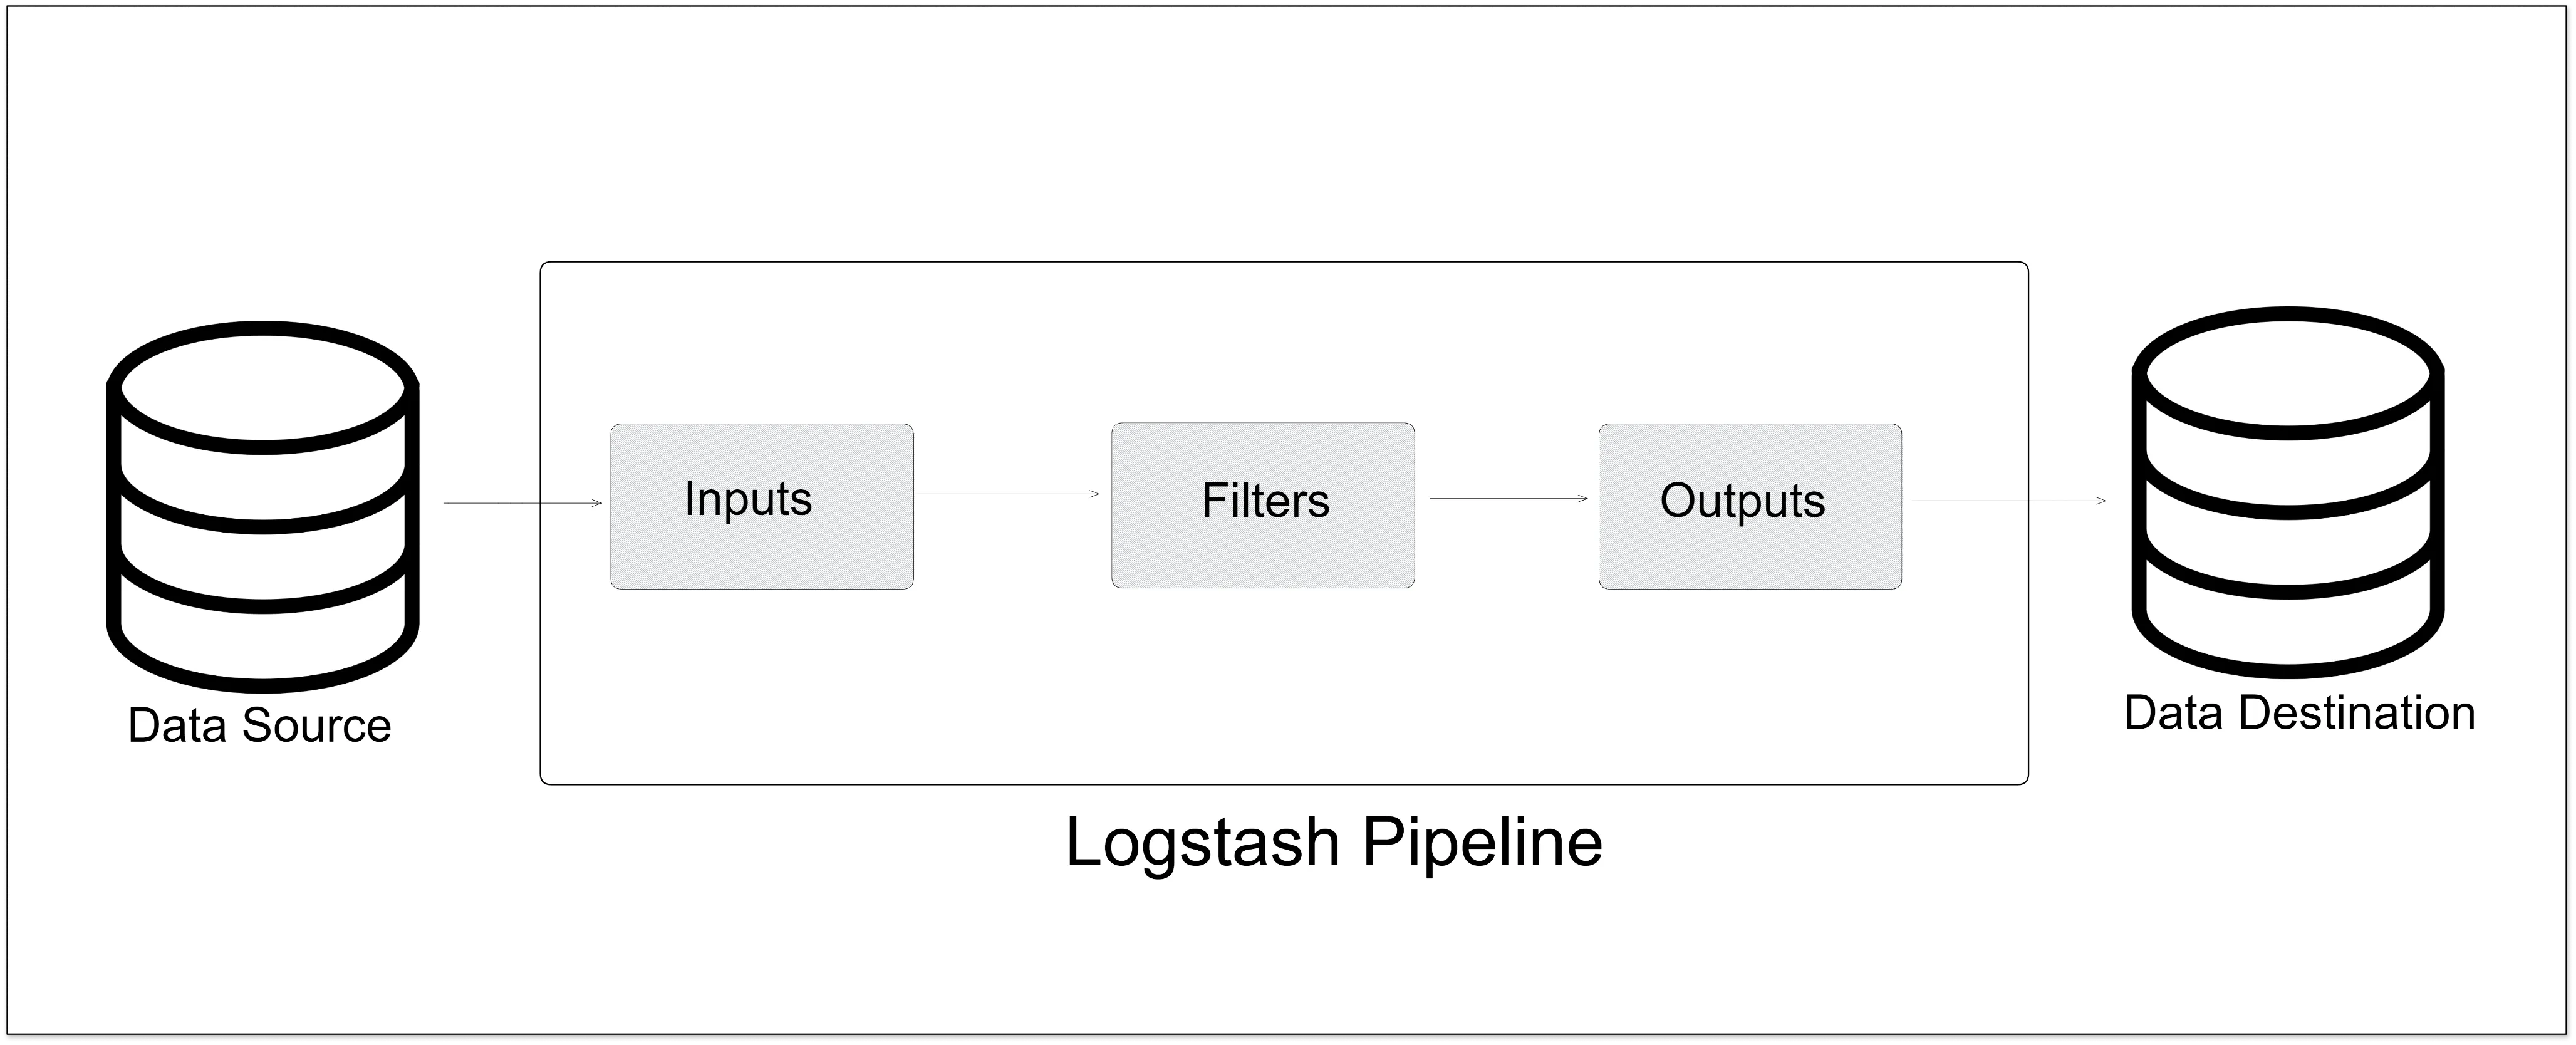 Basic Architecture of Logstash